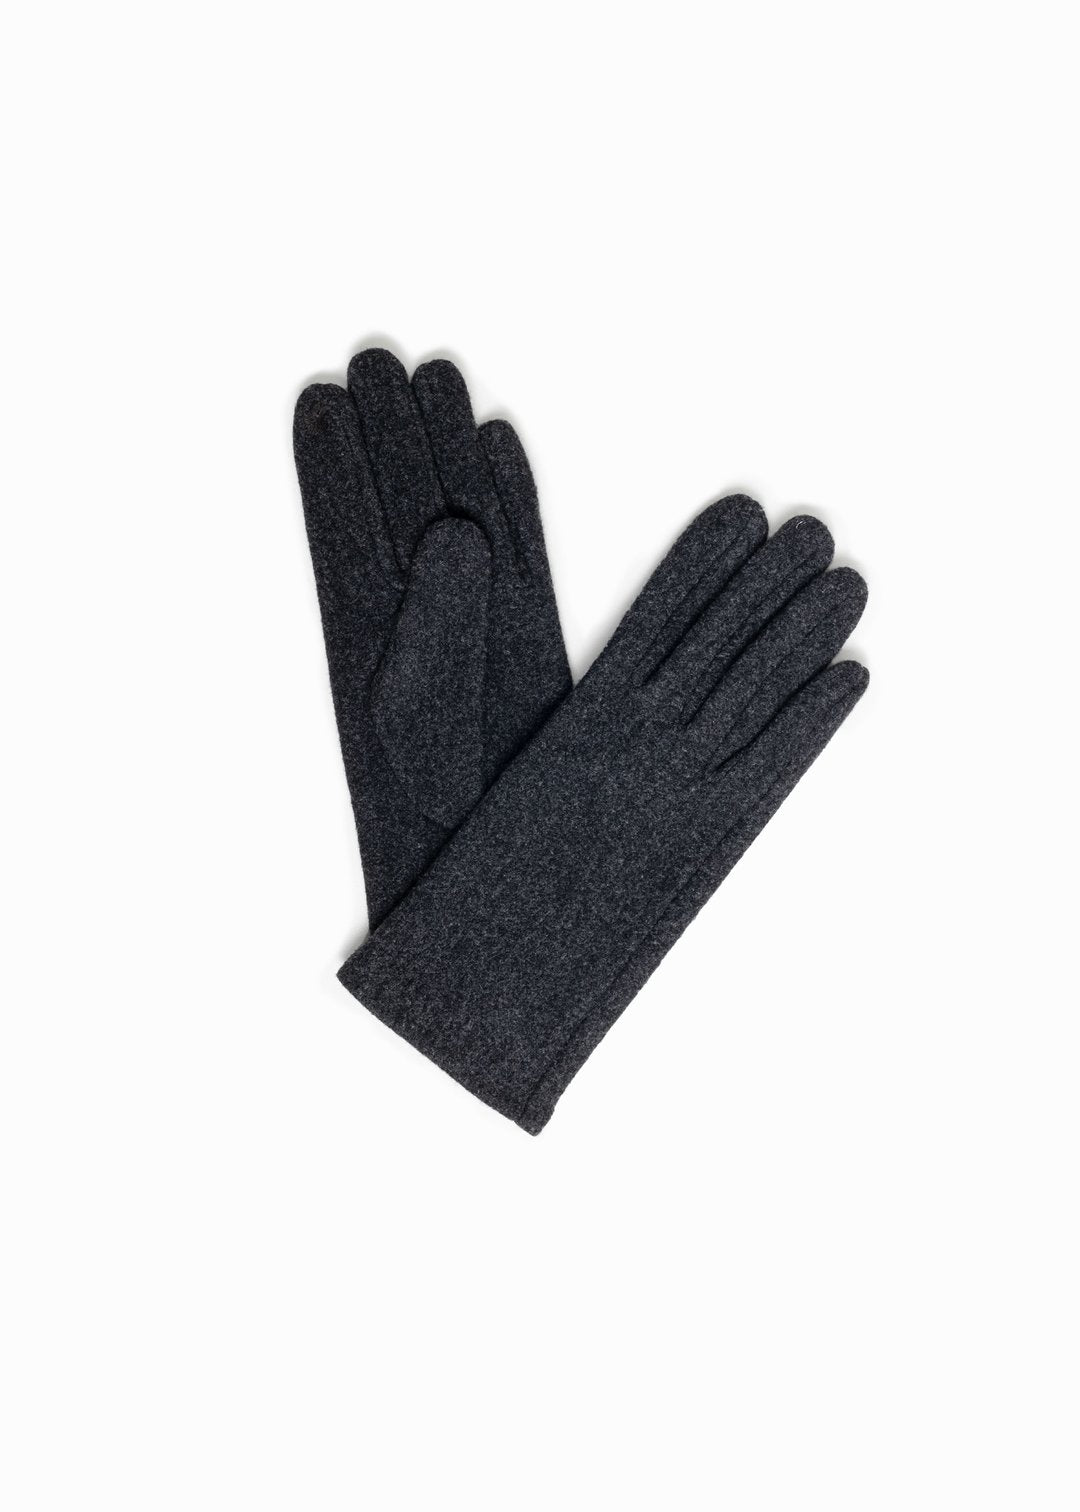 Shari Gloves in Charcoal - Madison's Niche 